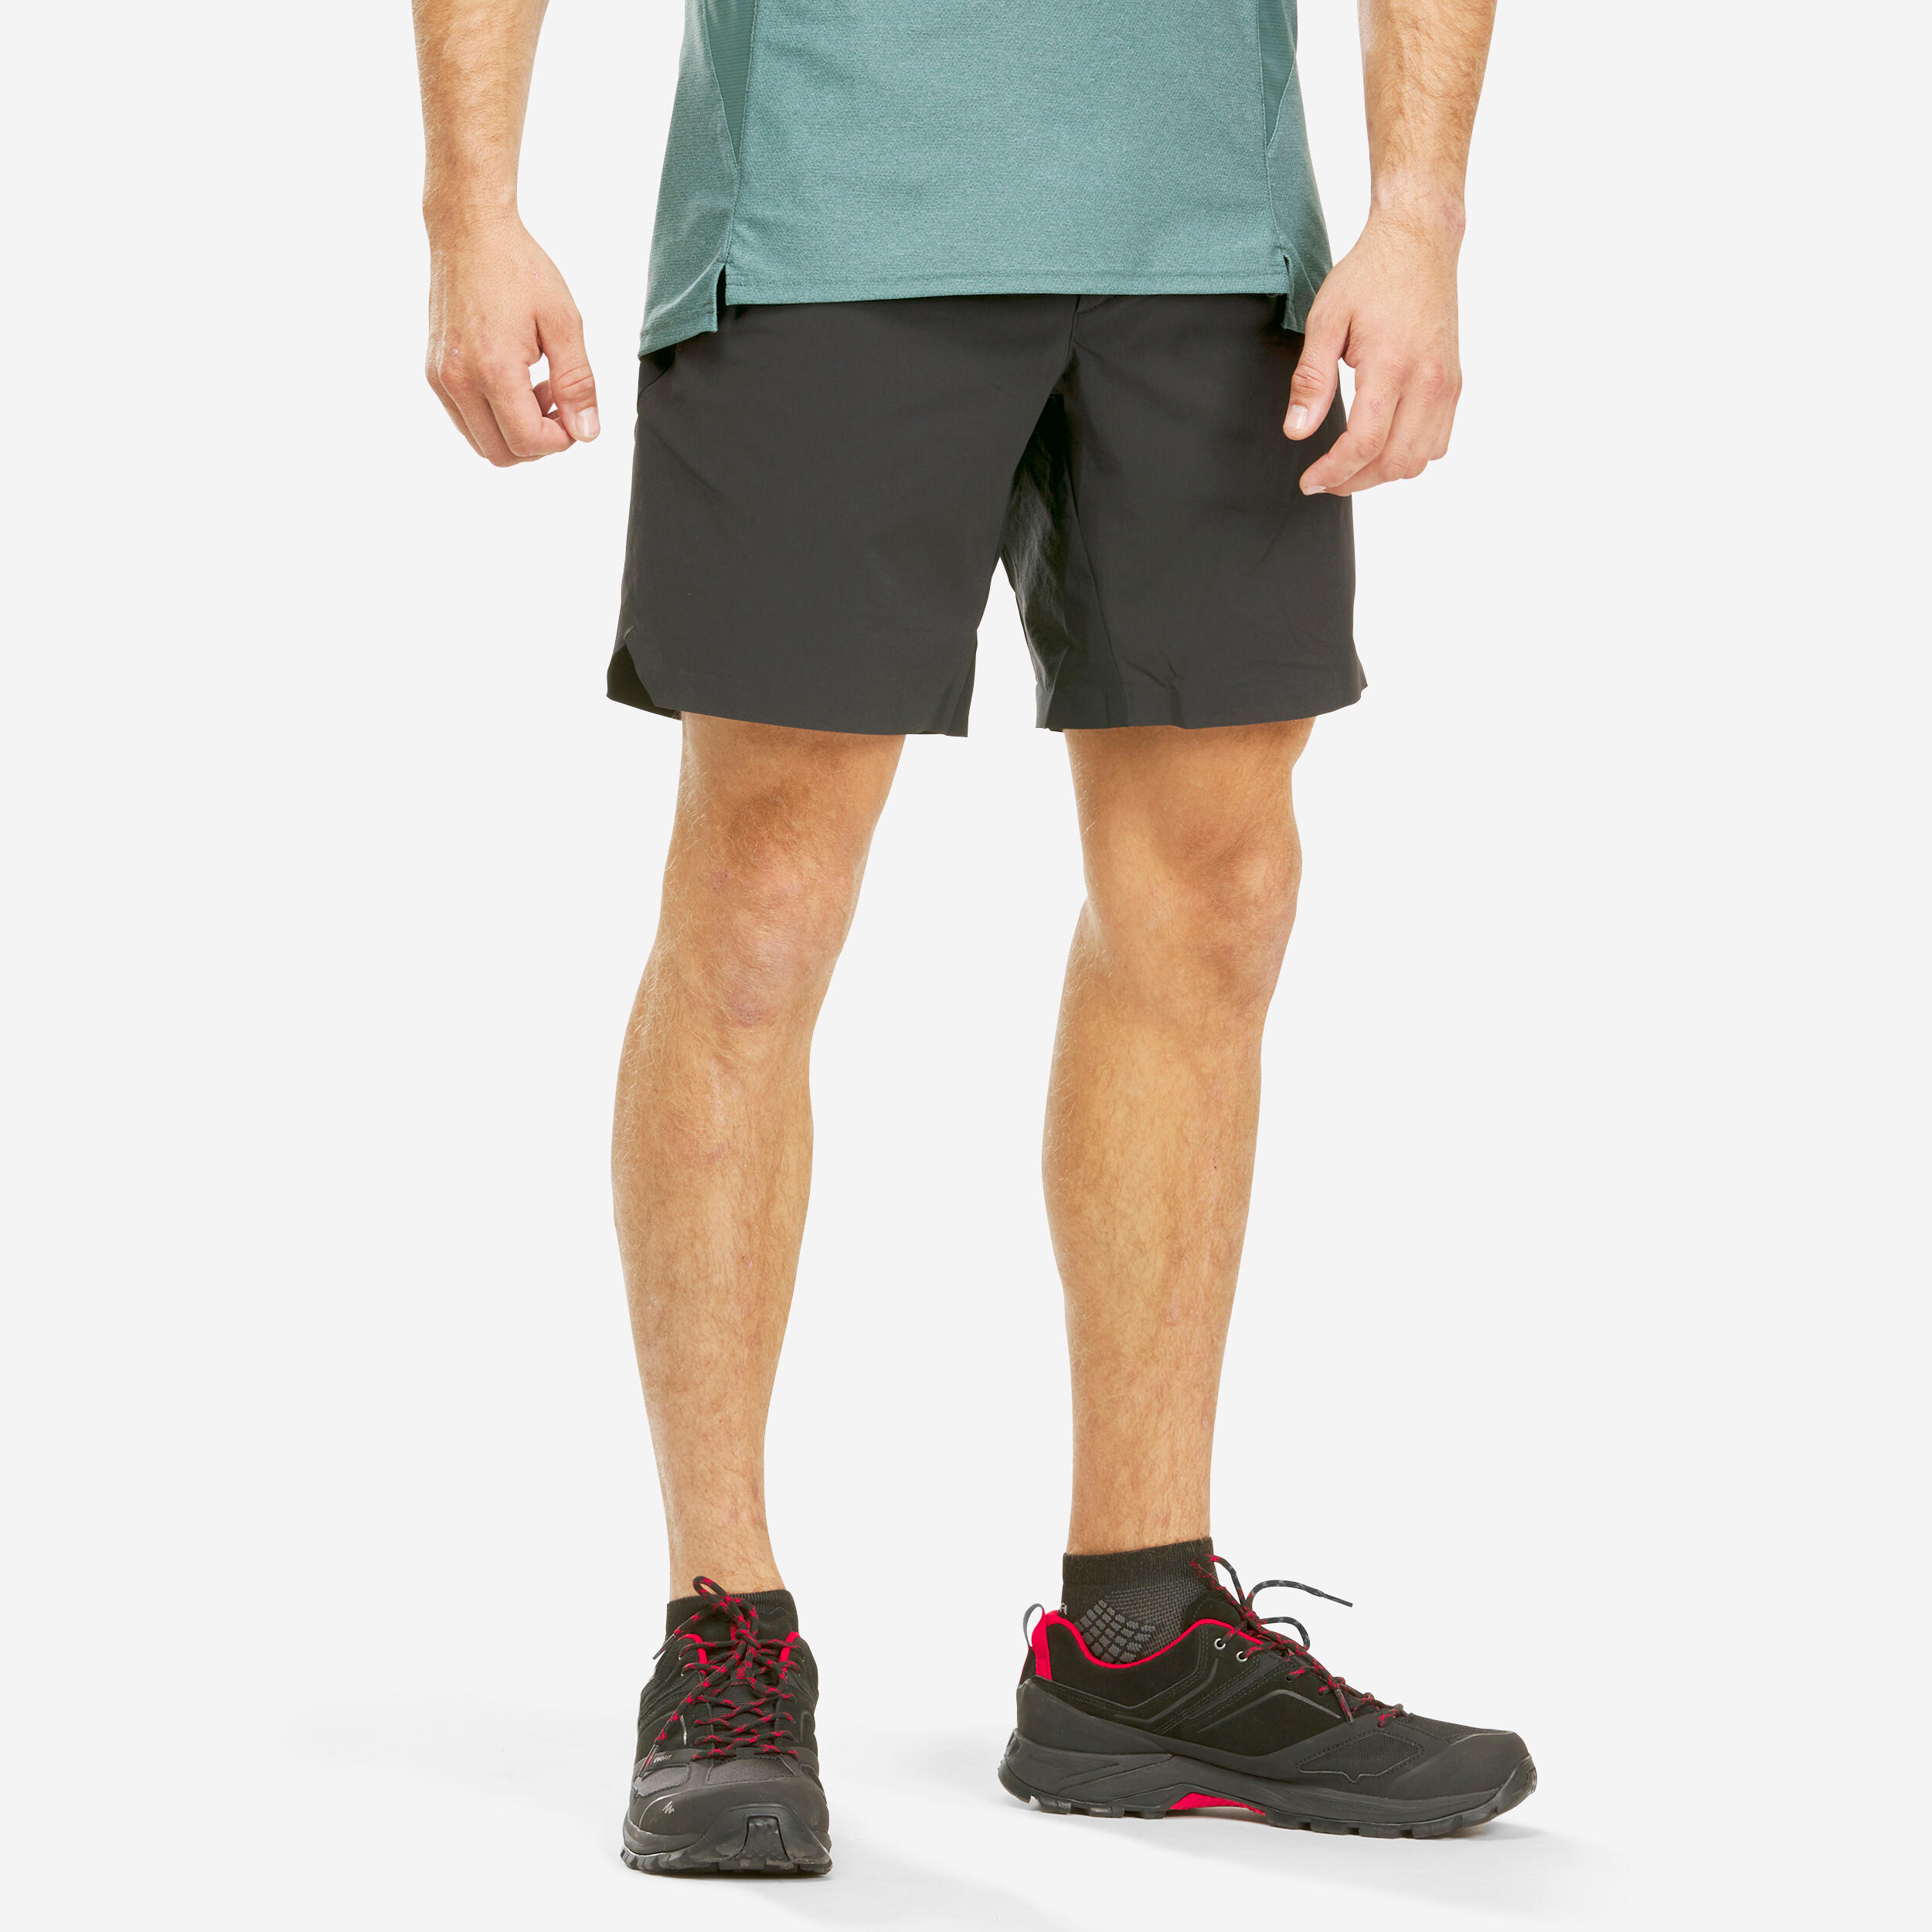 Men’s Hiking Shorts